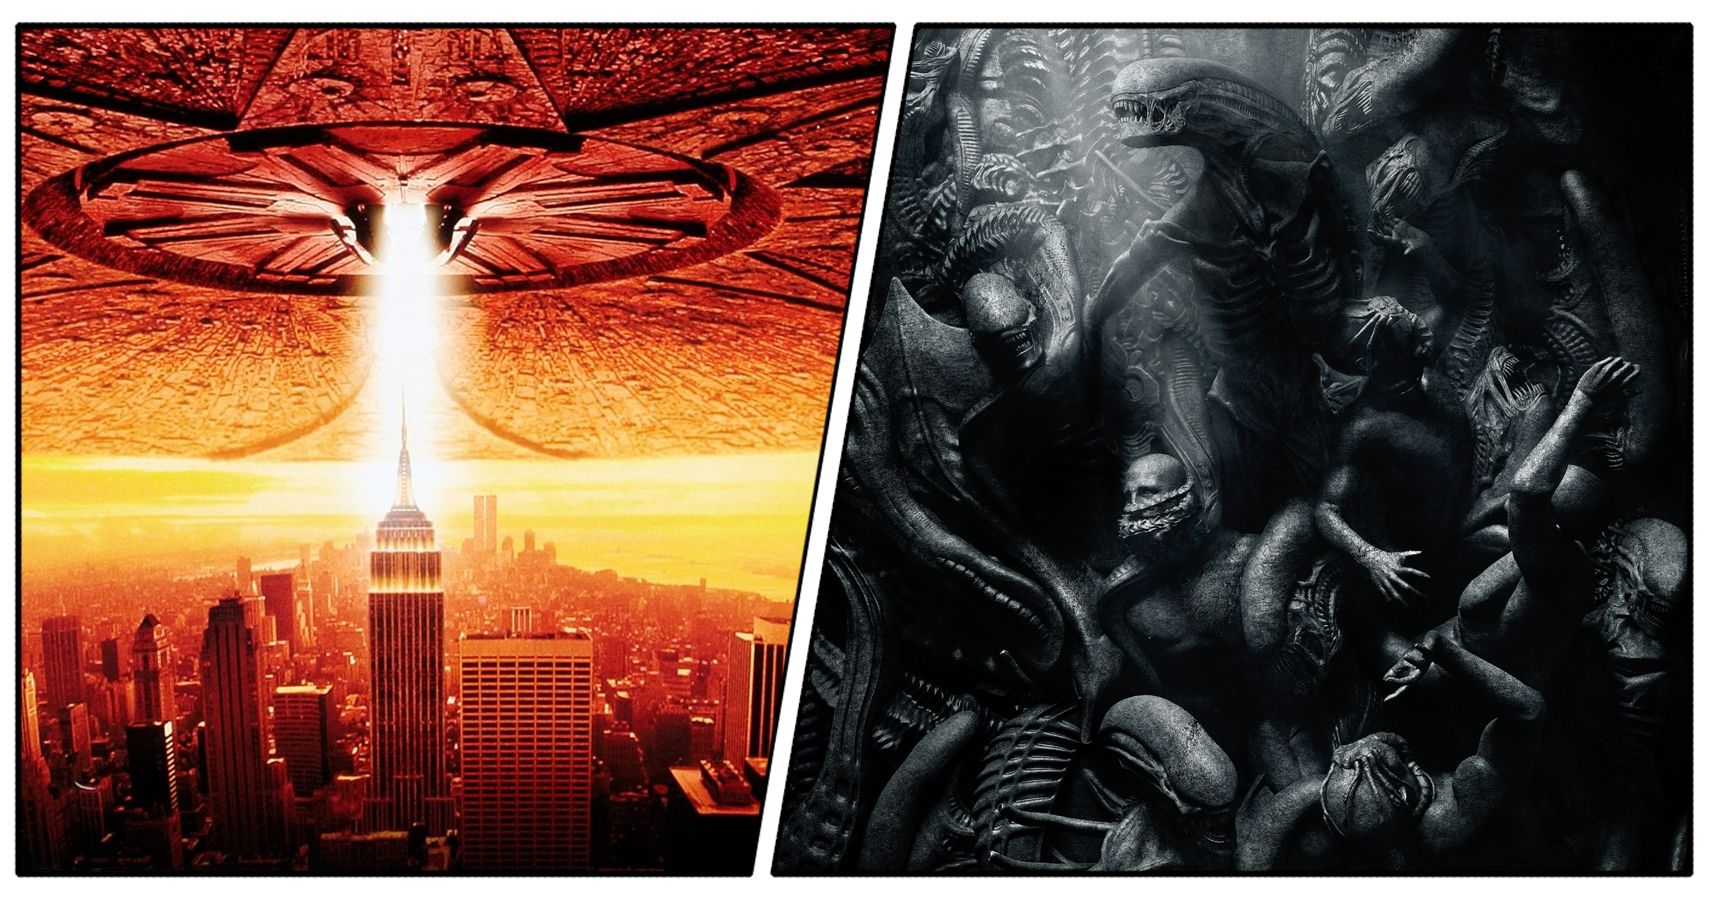 10 Deadliest Cinematic Alien Encounters Ranked